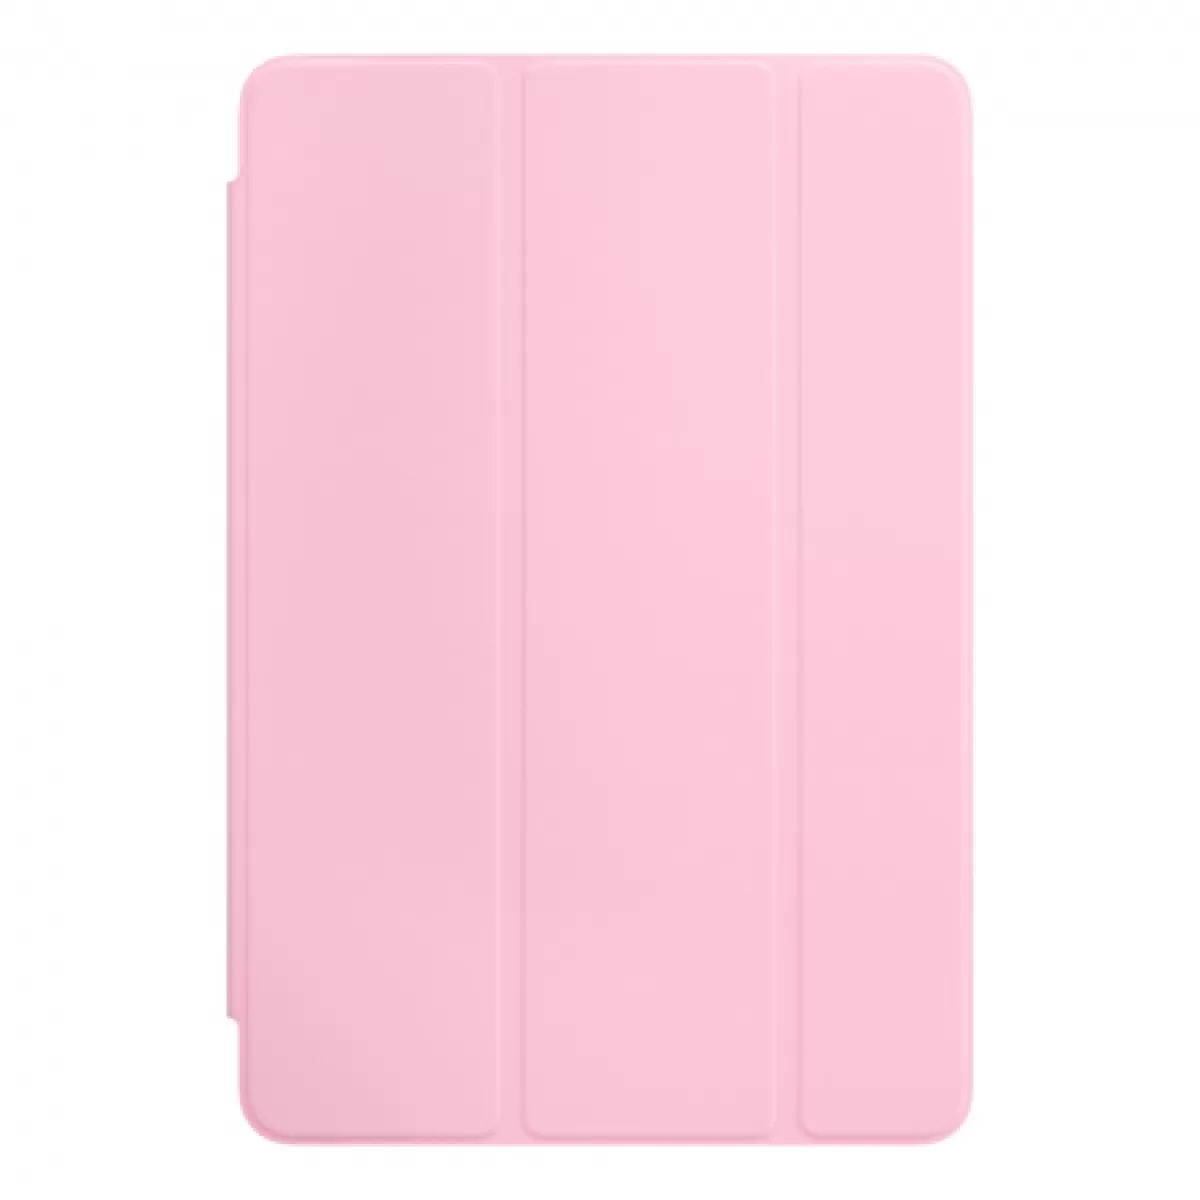 Apple iPad mini 4 Smart Cover Light Pink